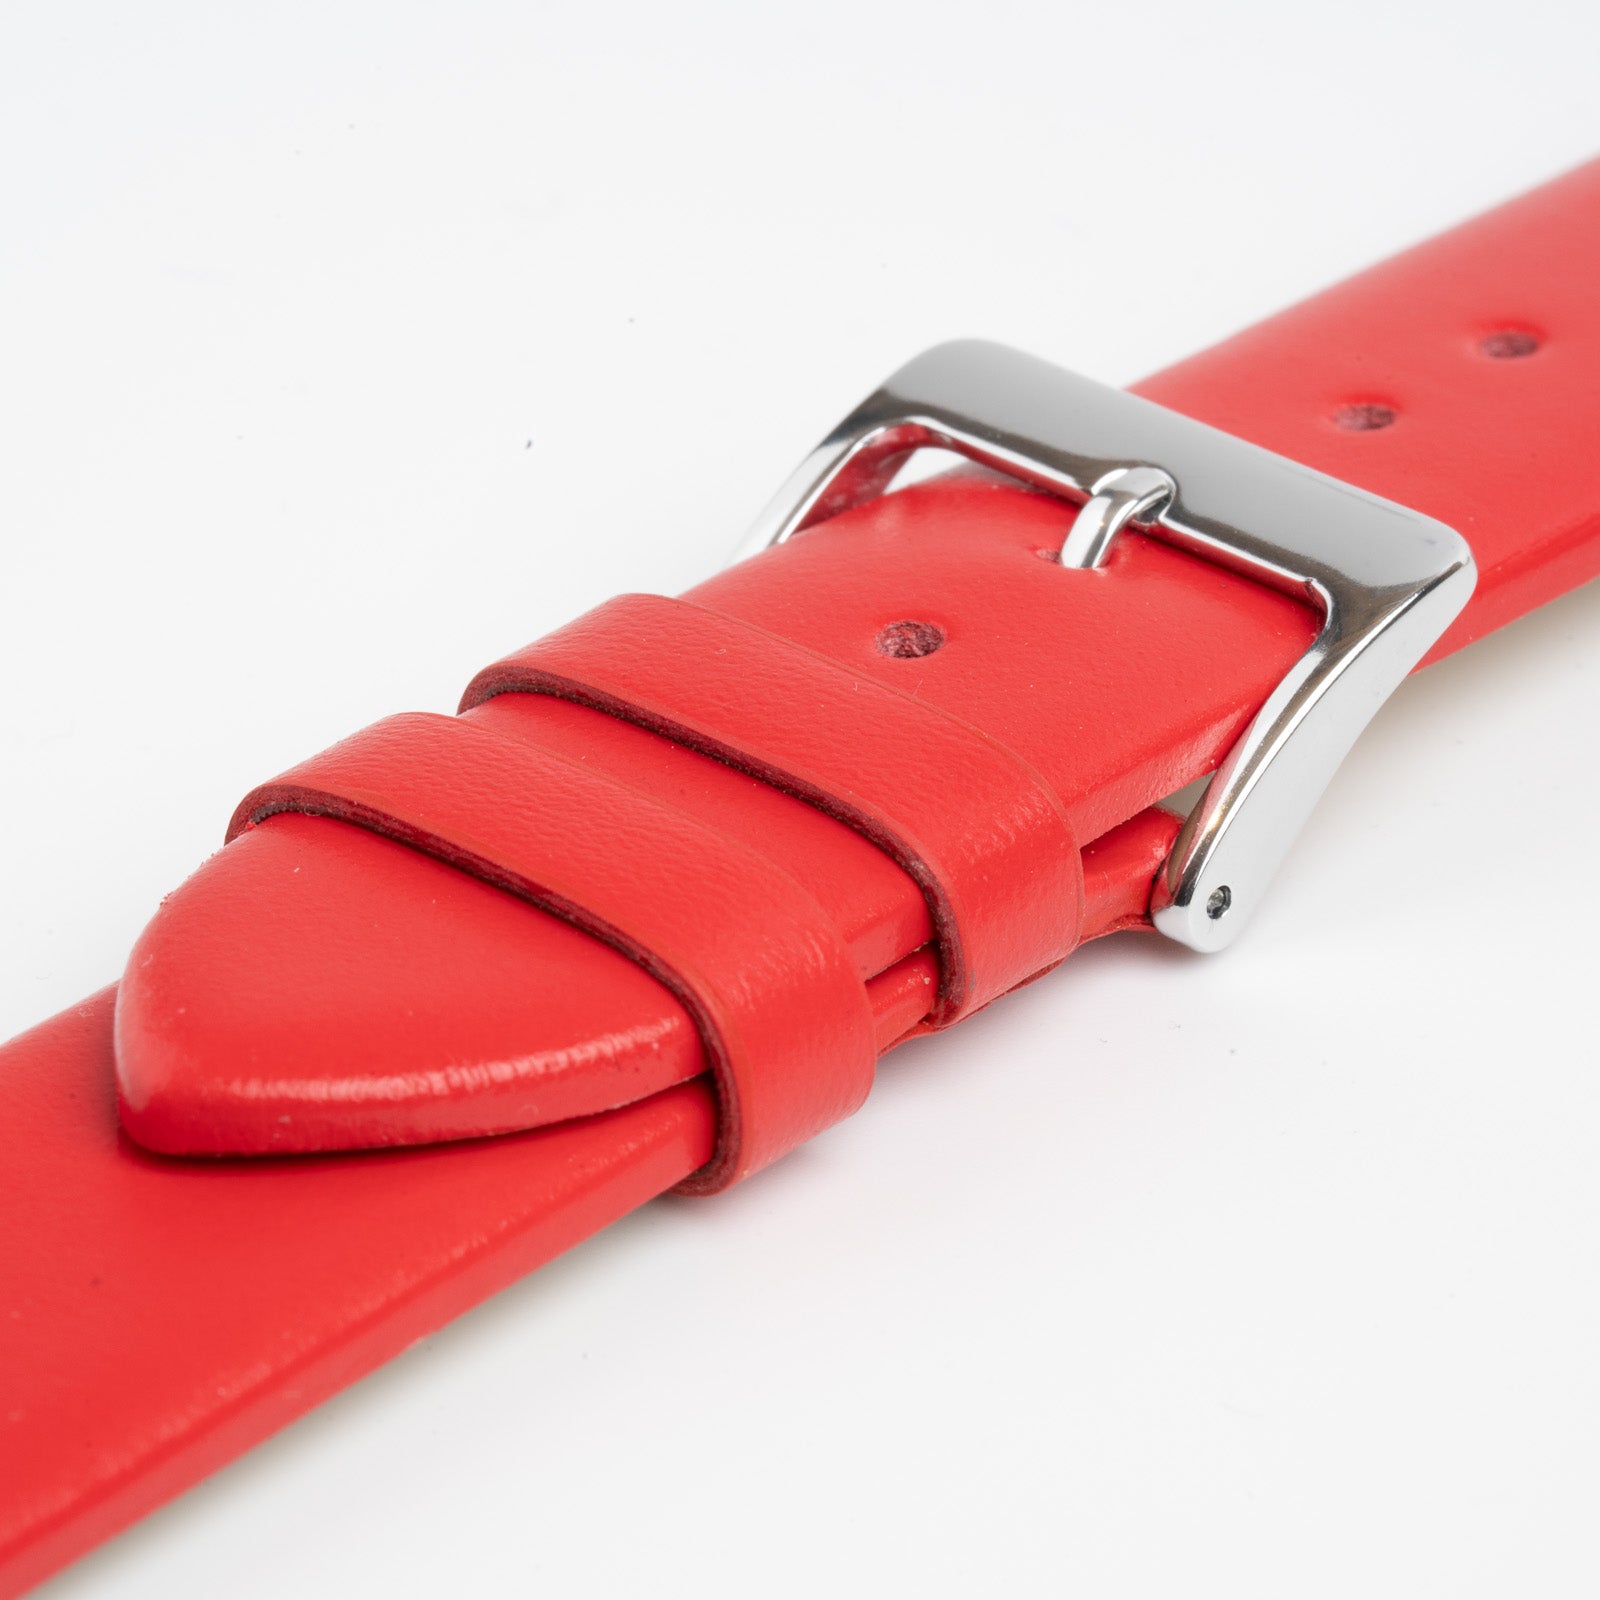 Windsor Smooth XL Red Watch Strap